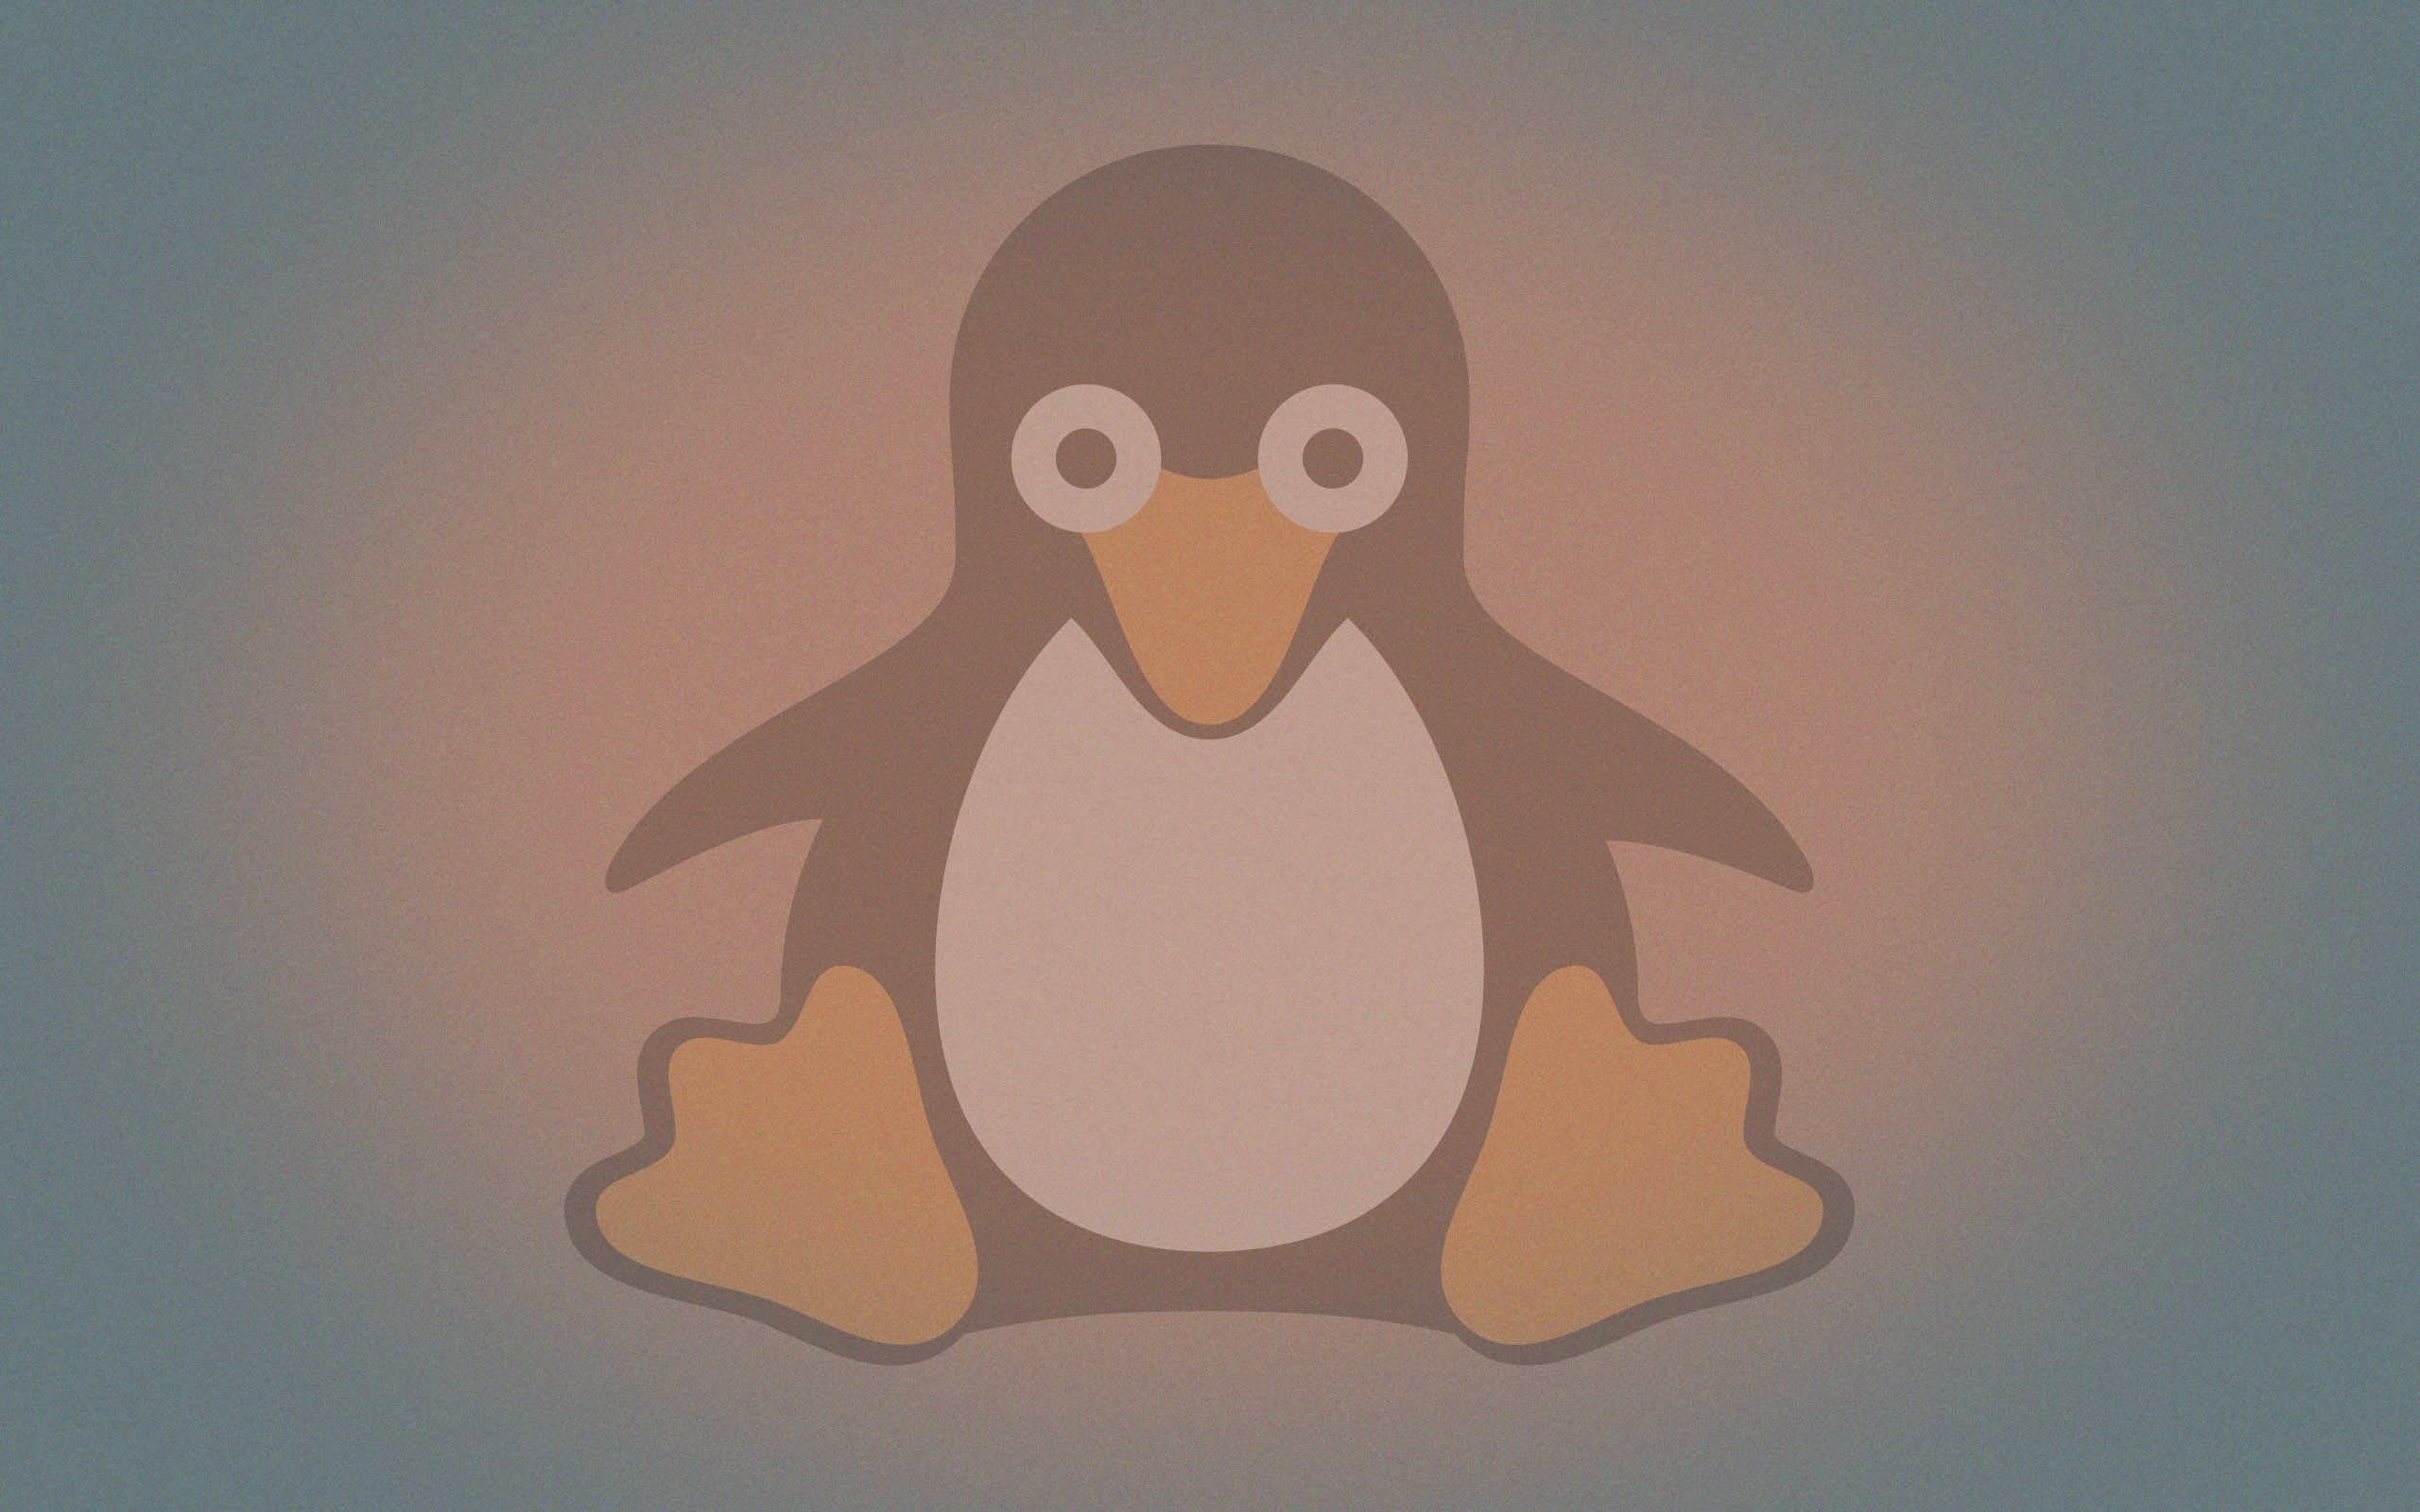 General 2560x1600 Linux Tux open source penguins logo operating system simple background digital art